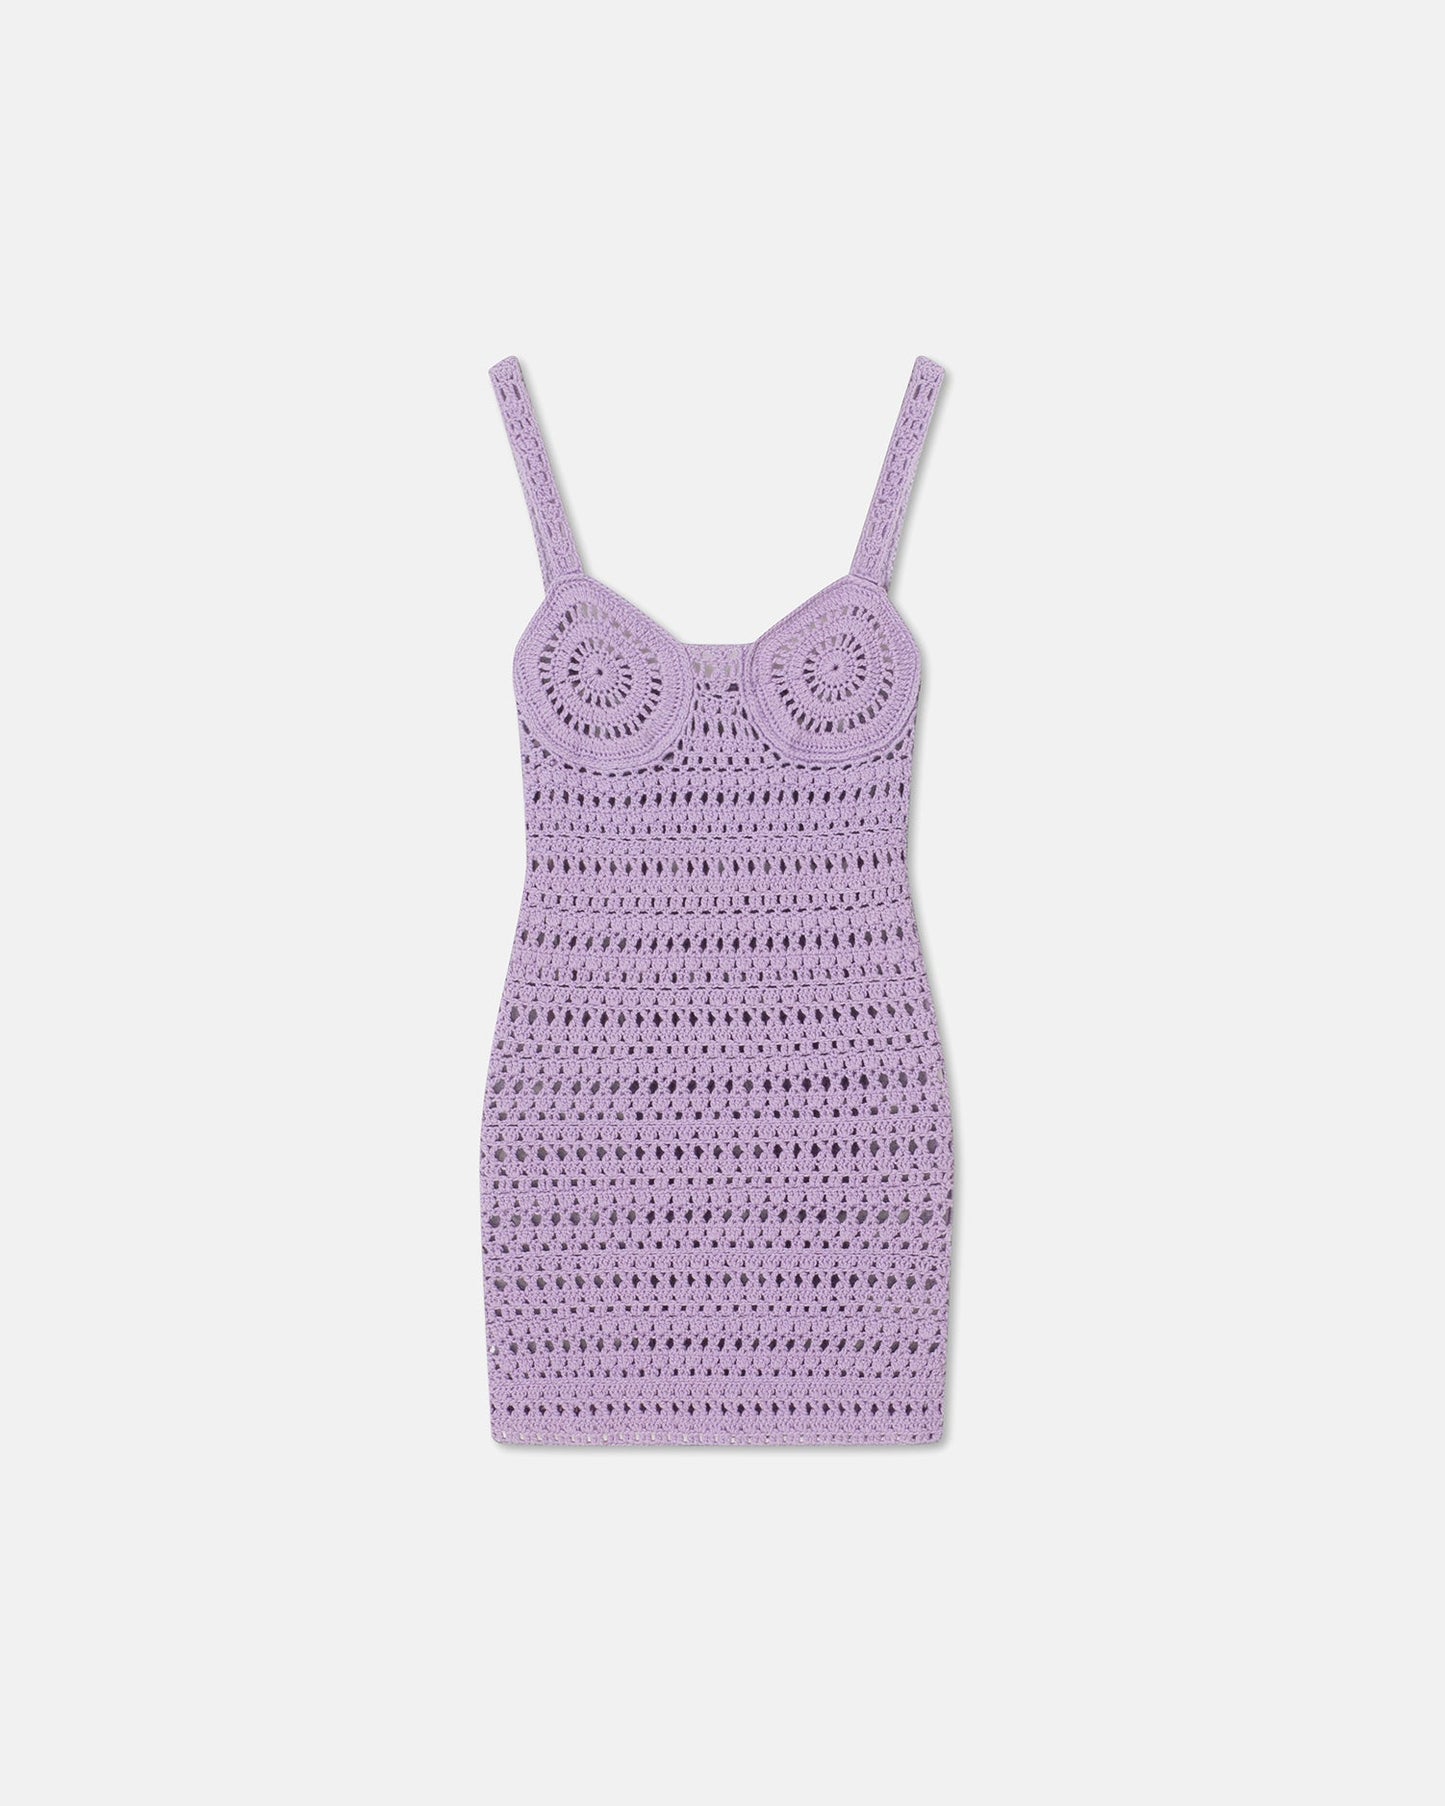 Maressa - Crochet-Knit Top - Lilac Ss23